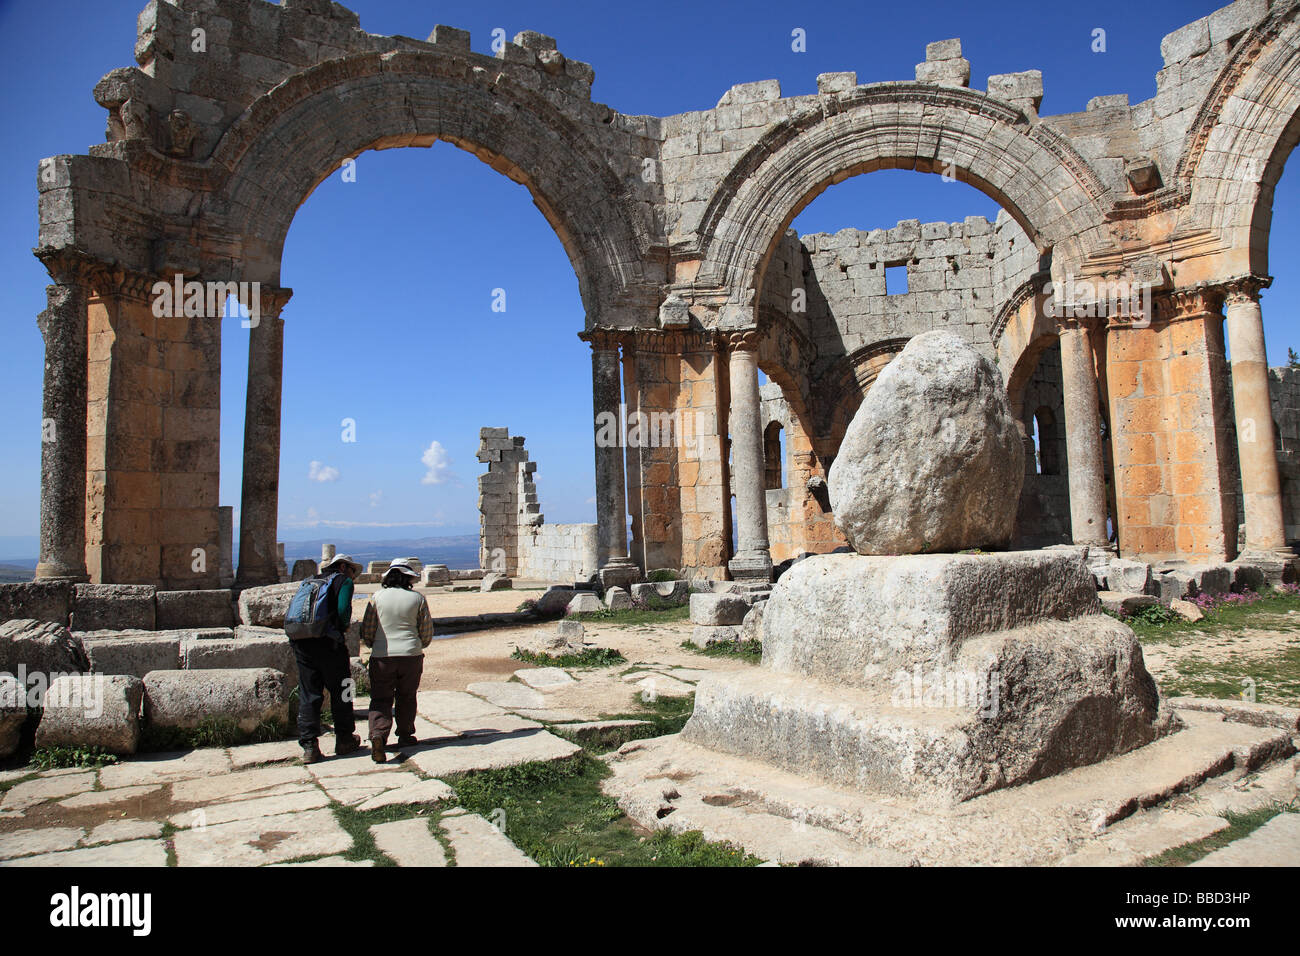 Aleppo Syrie Moyen Orient syrien vieille ville ancienne citadelle Asie religion Alépine musulmans sunnites, Gouvernorat de l'Islam arabe arabe Banque D'Images